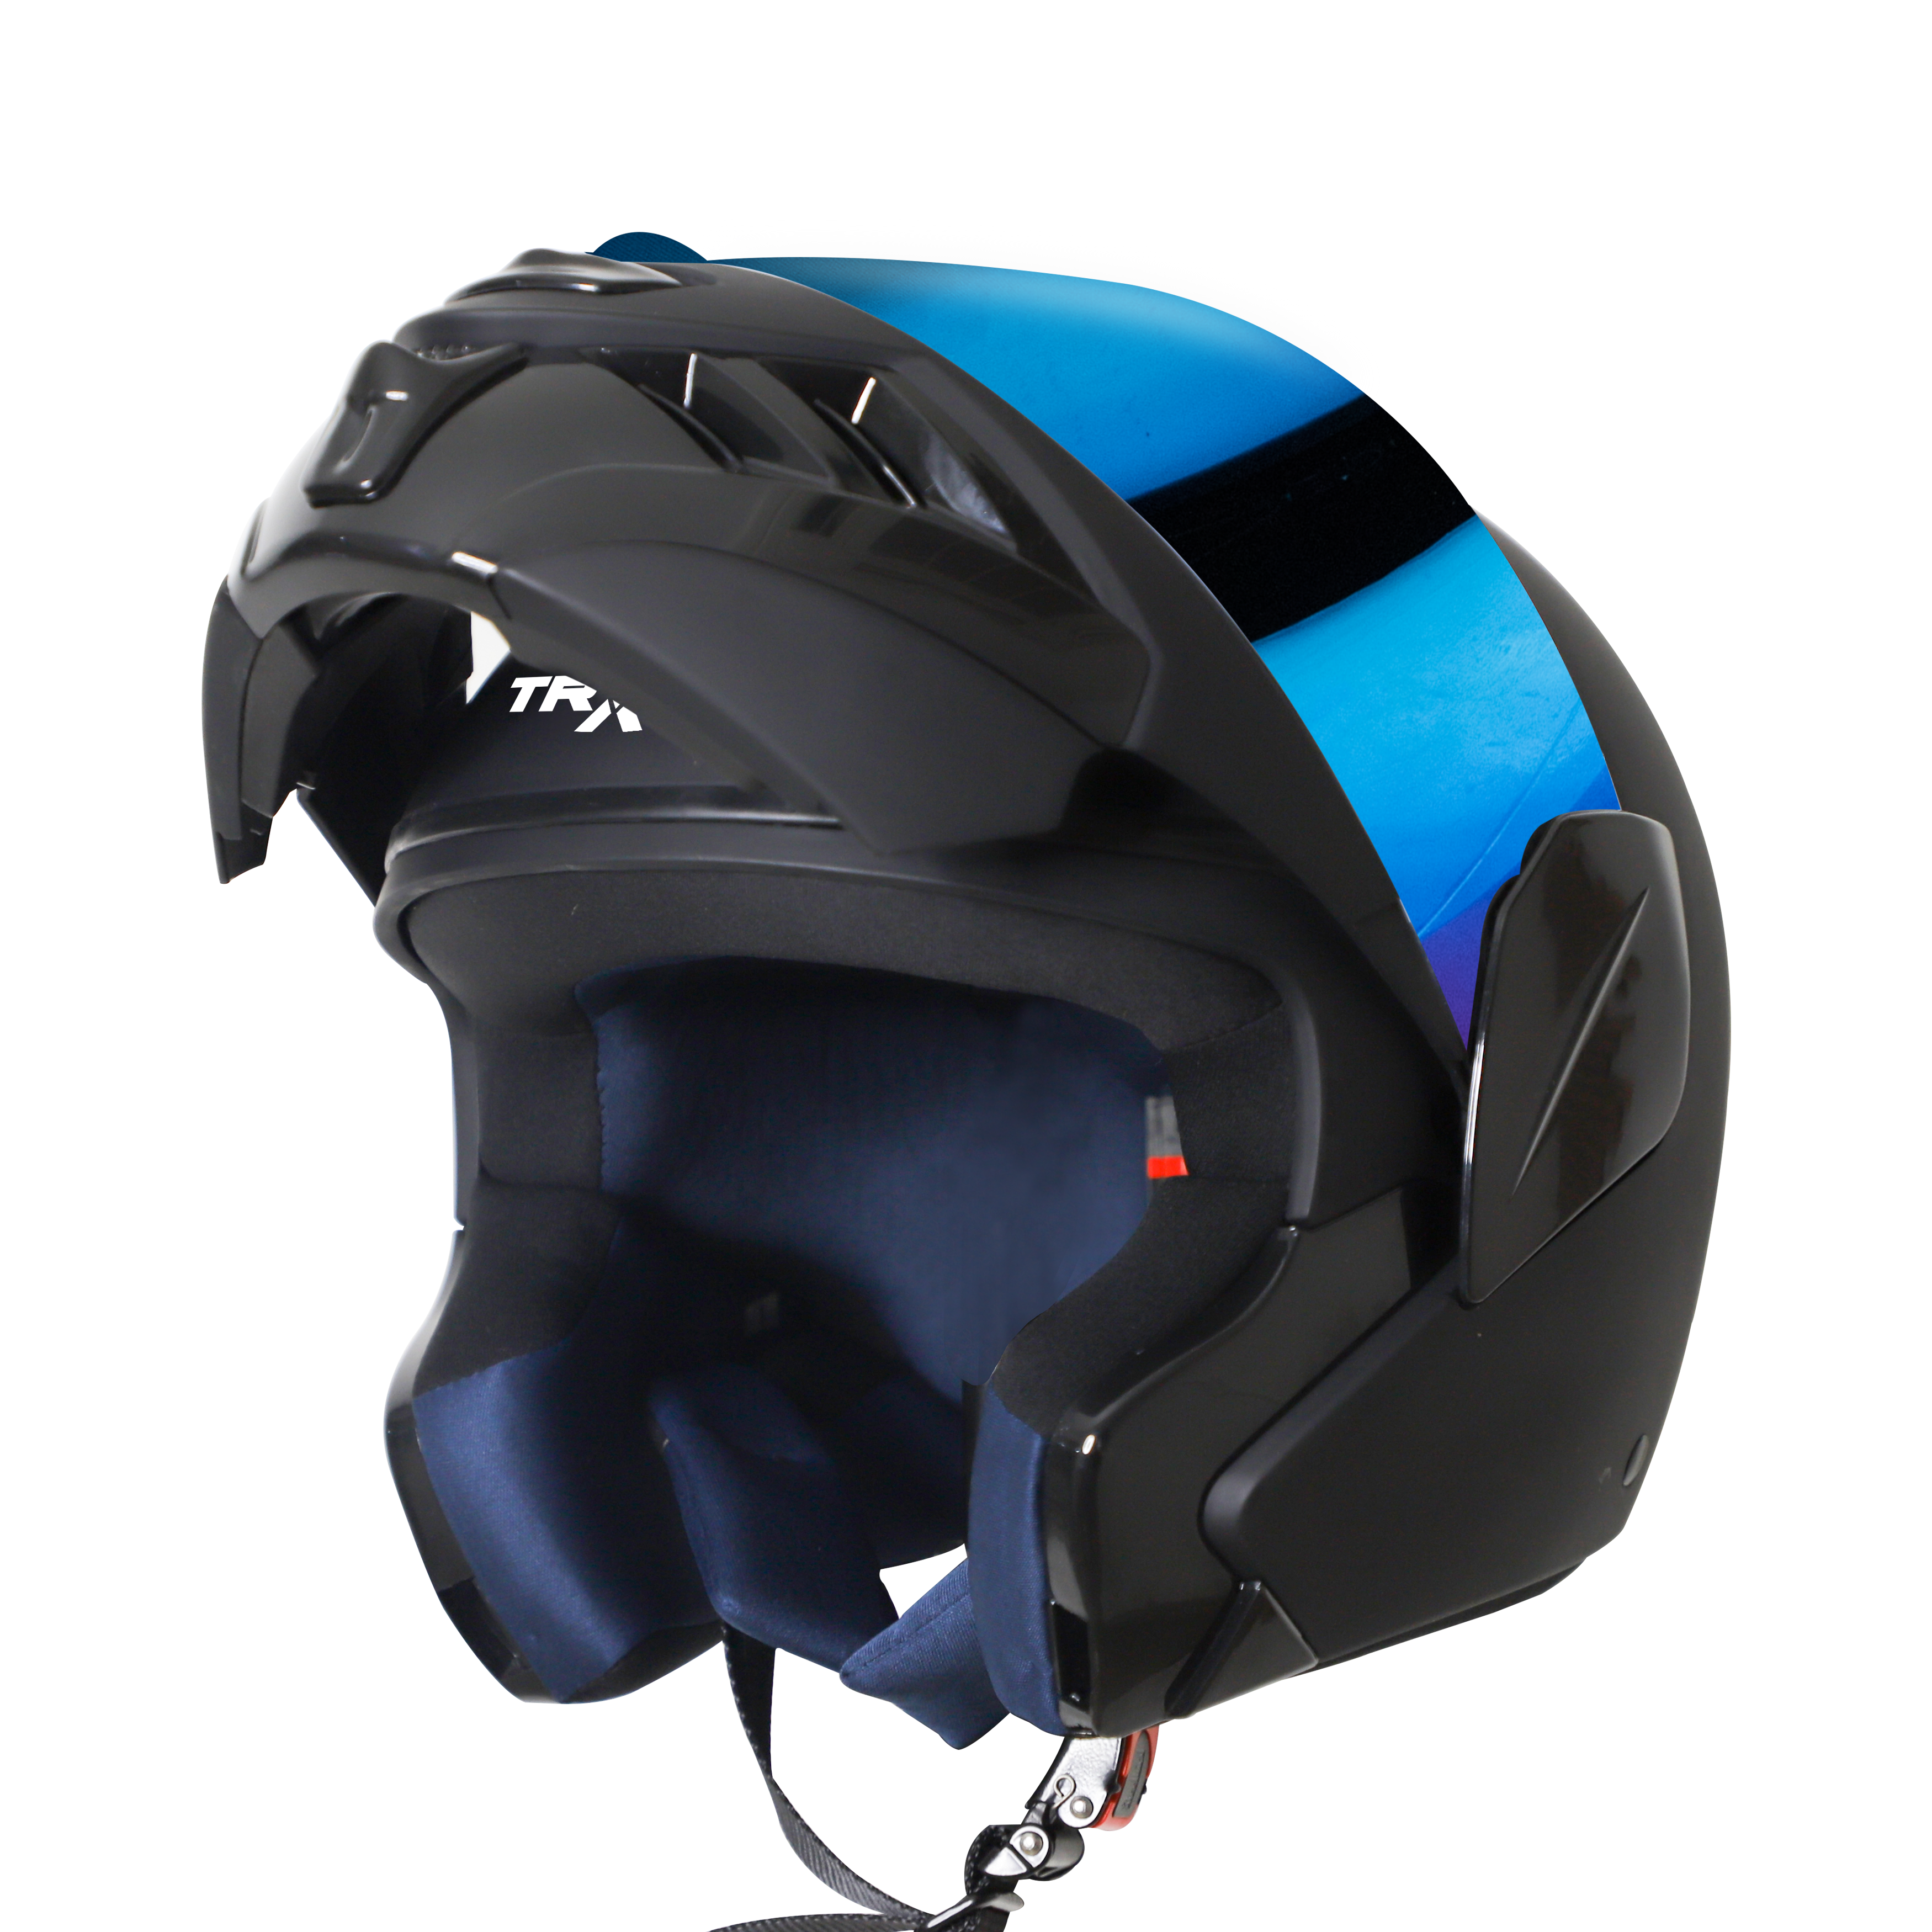  Steelbird SB-34 TRX ISI Certified Flip-Up Helmet For Men And Women (Matt Axis Grey With Chrome Blue Visor)